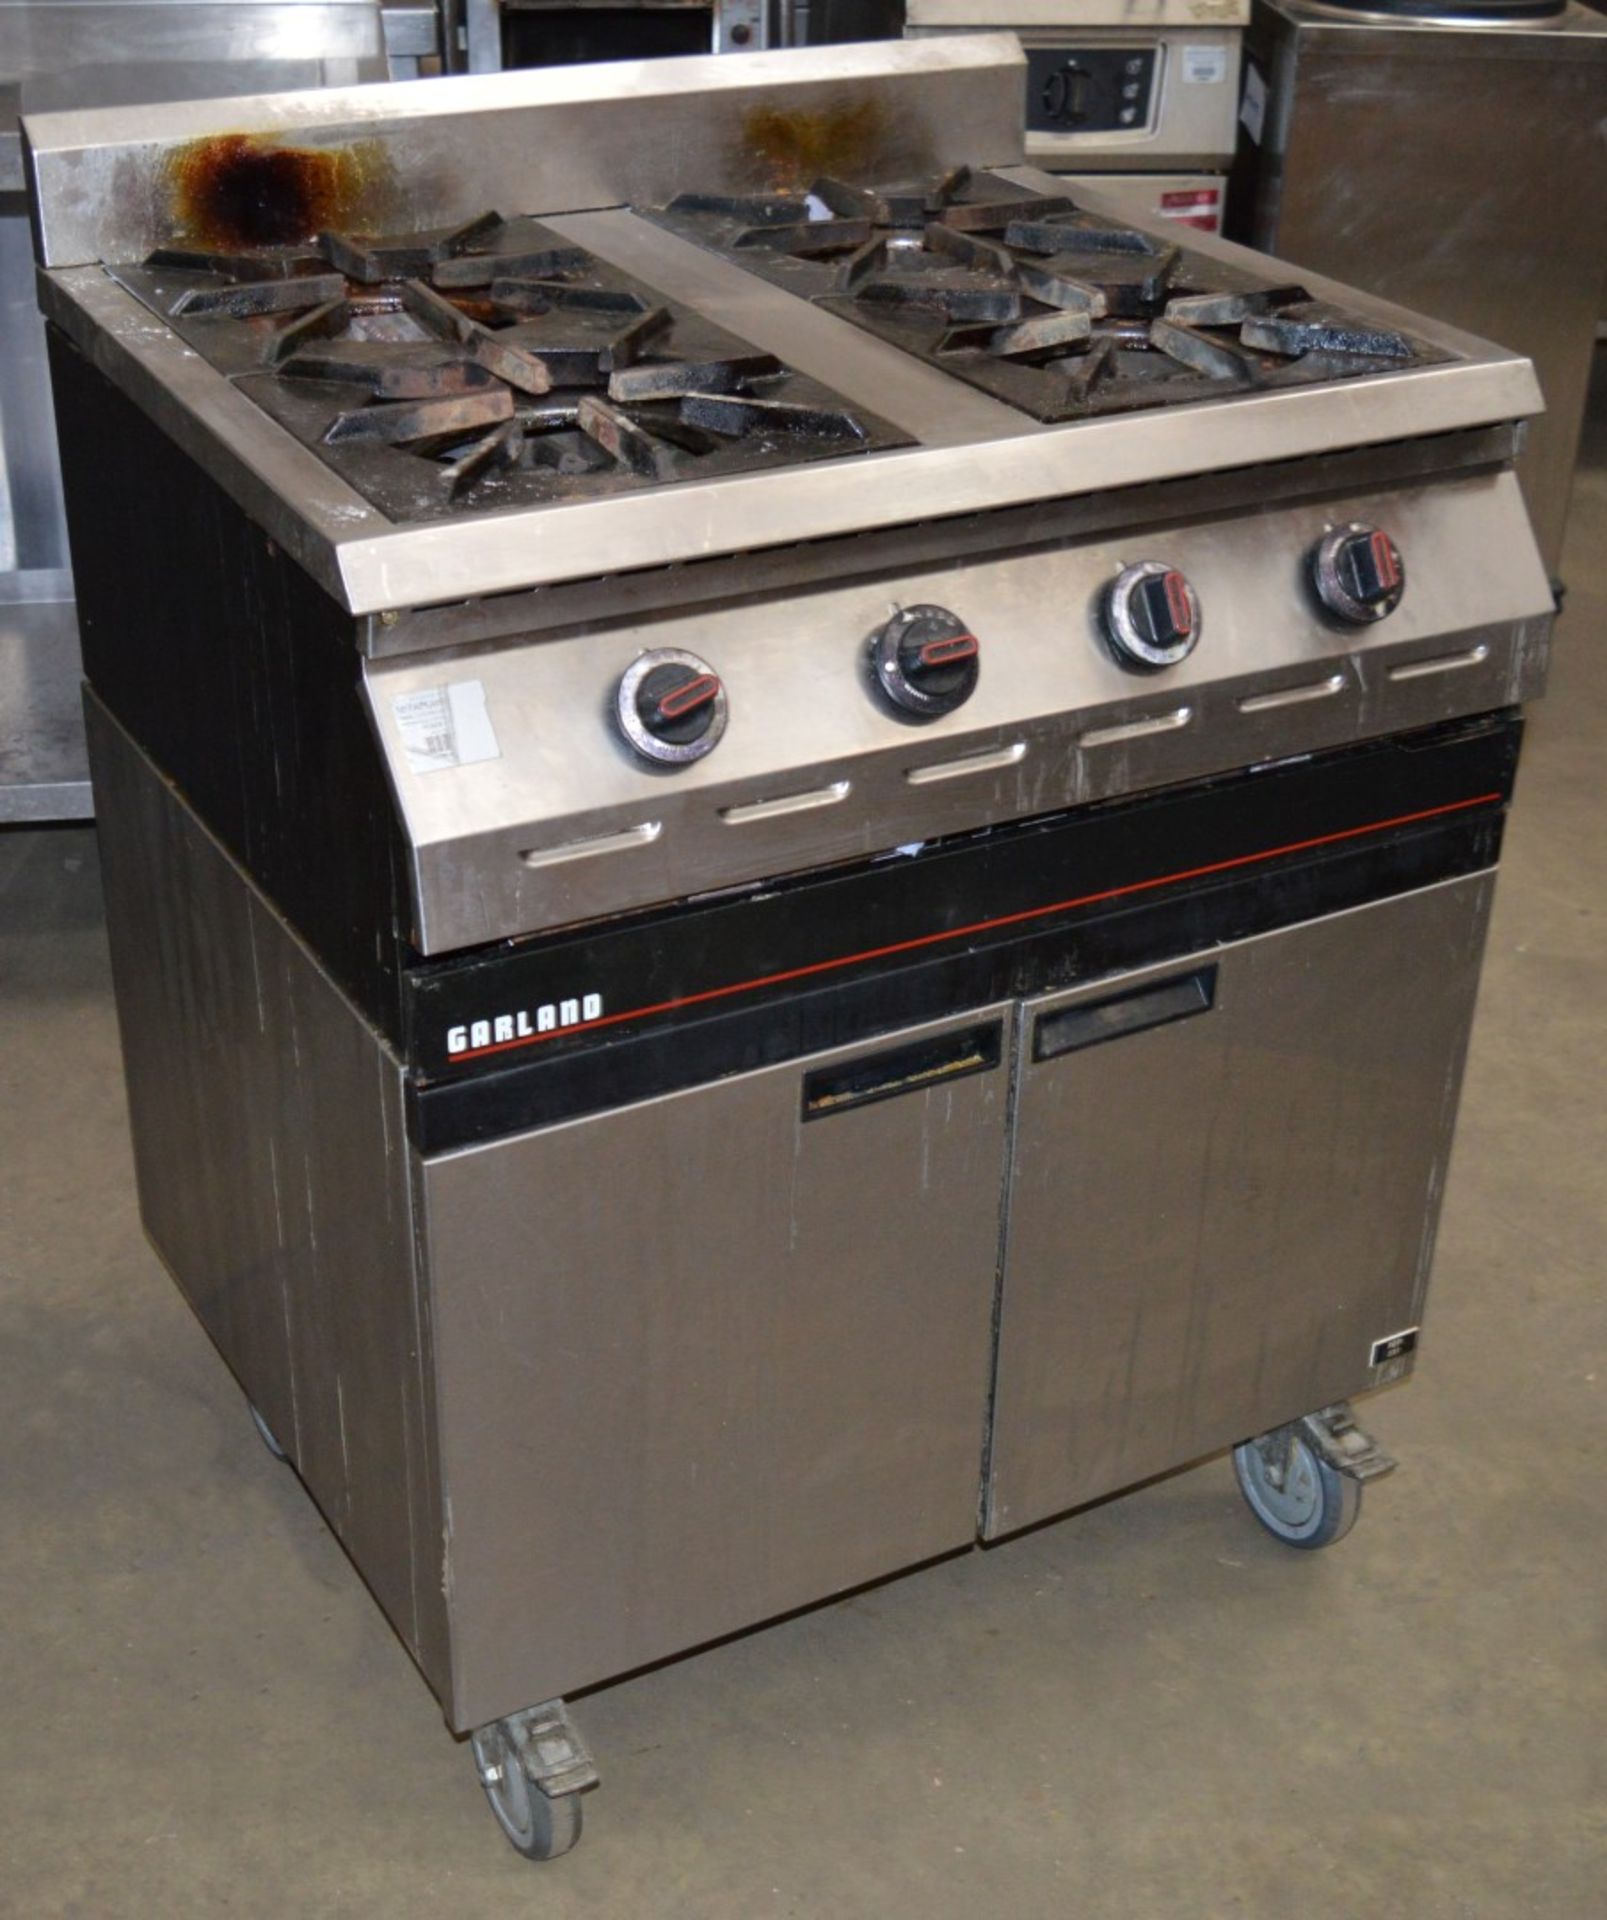 1 x Garland Commercial Range Cooker - Four Gas Burners - On Castors - Suitable For Professional